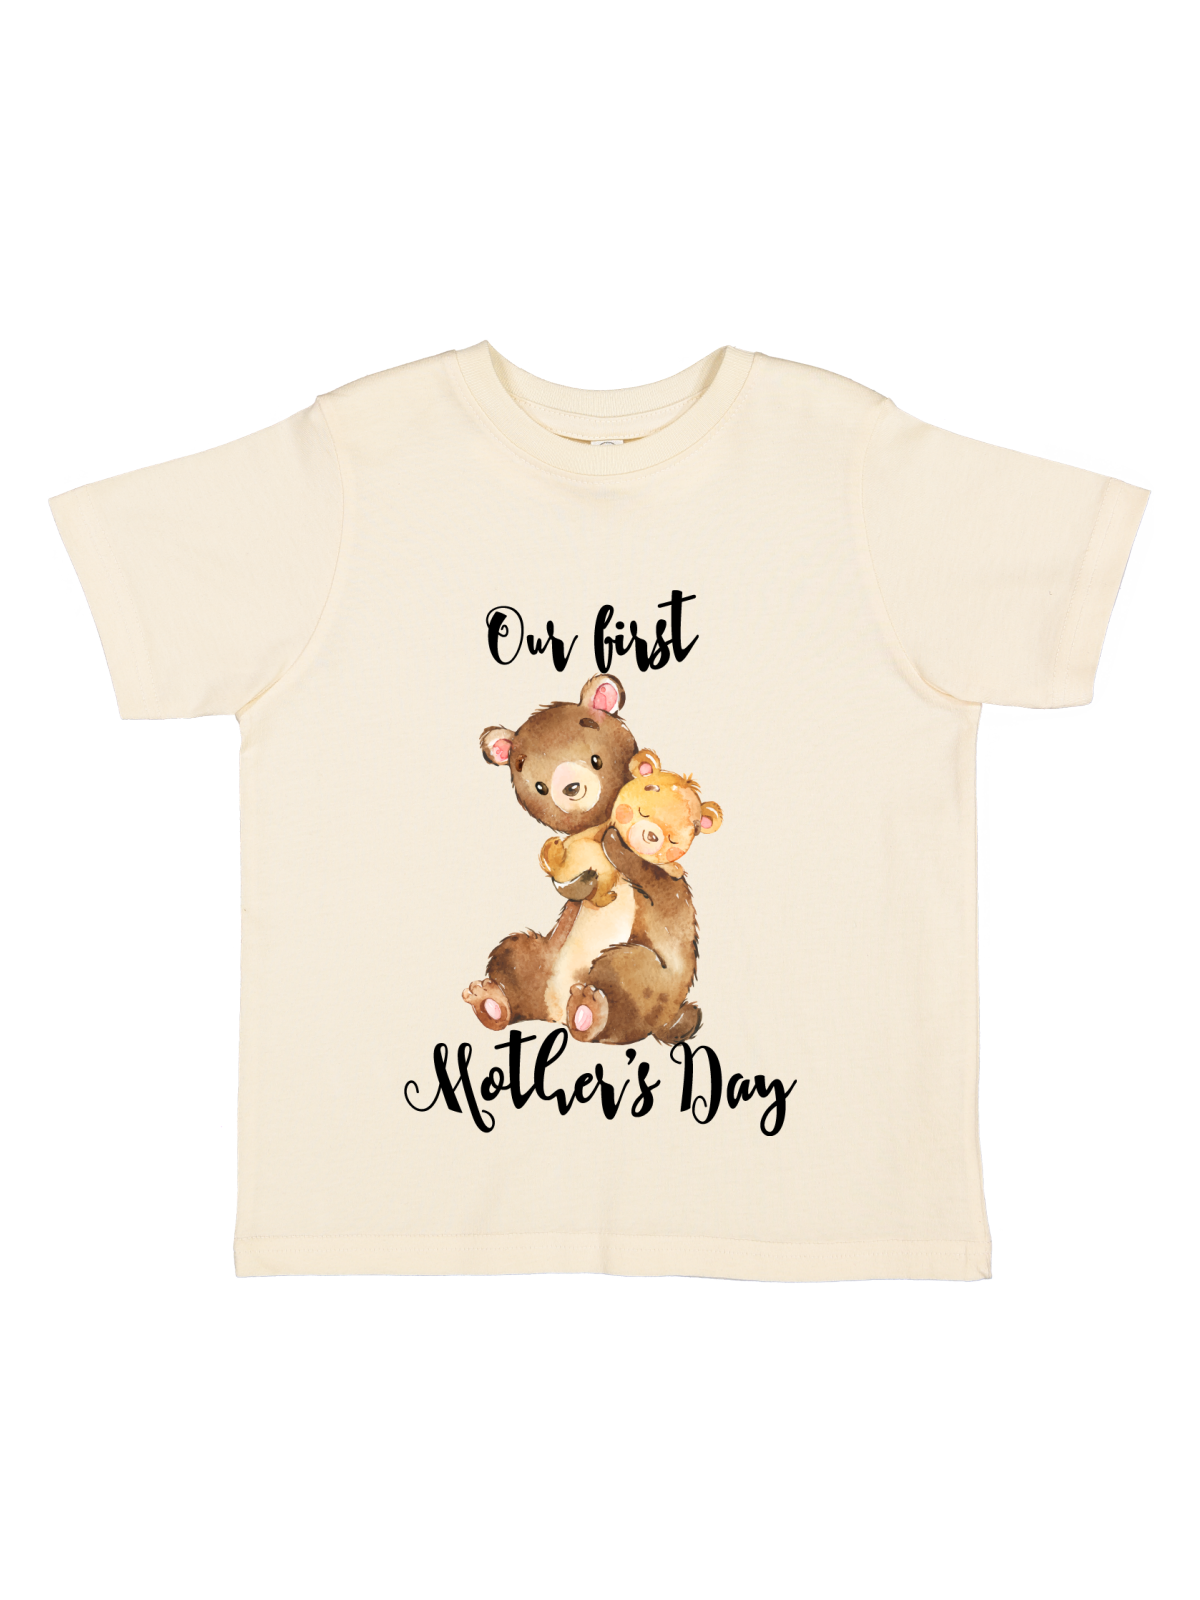 Homeschool Mama Bear (White Design) Short-Sleeve Unisex T-Shirt